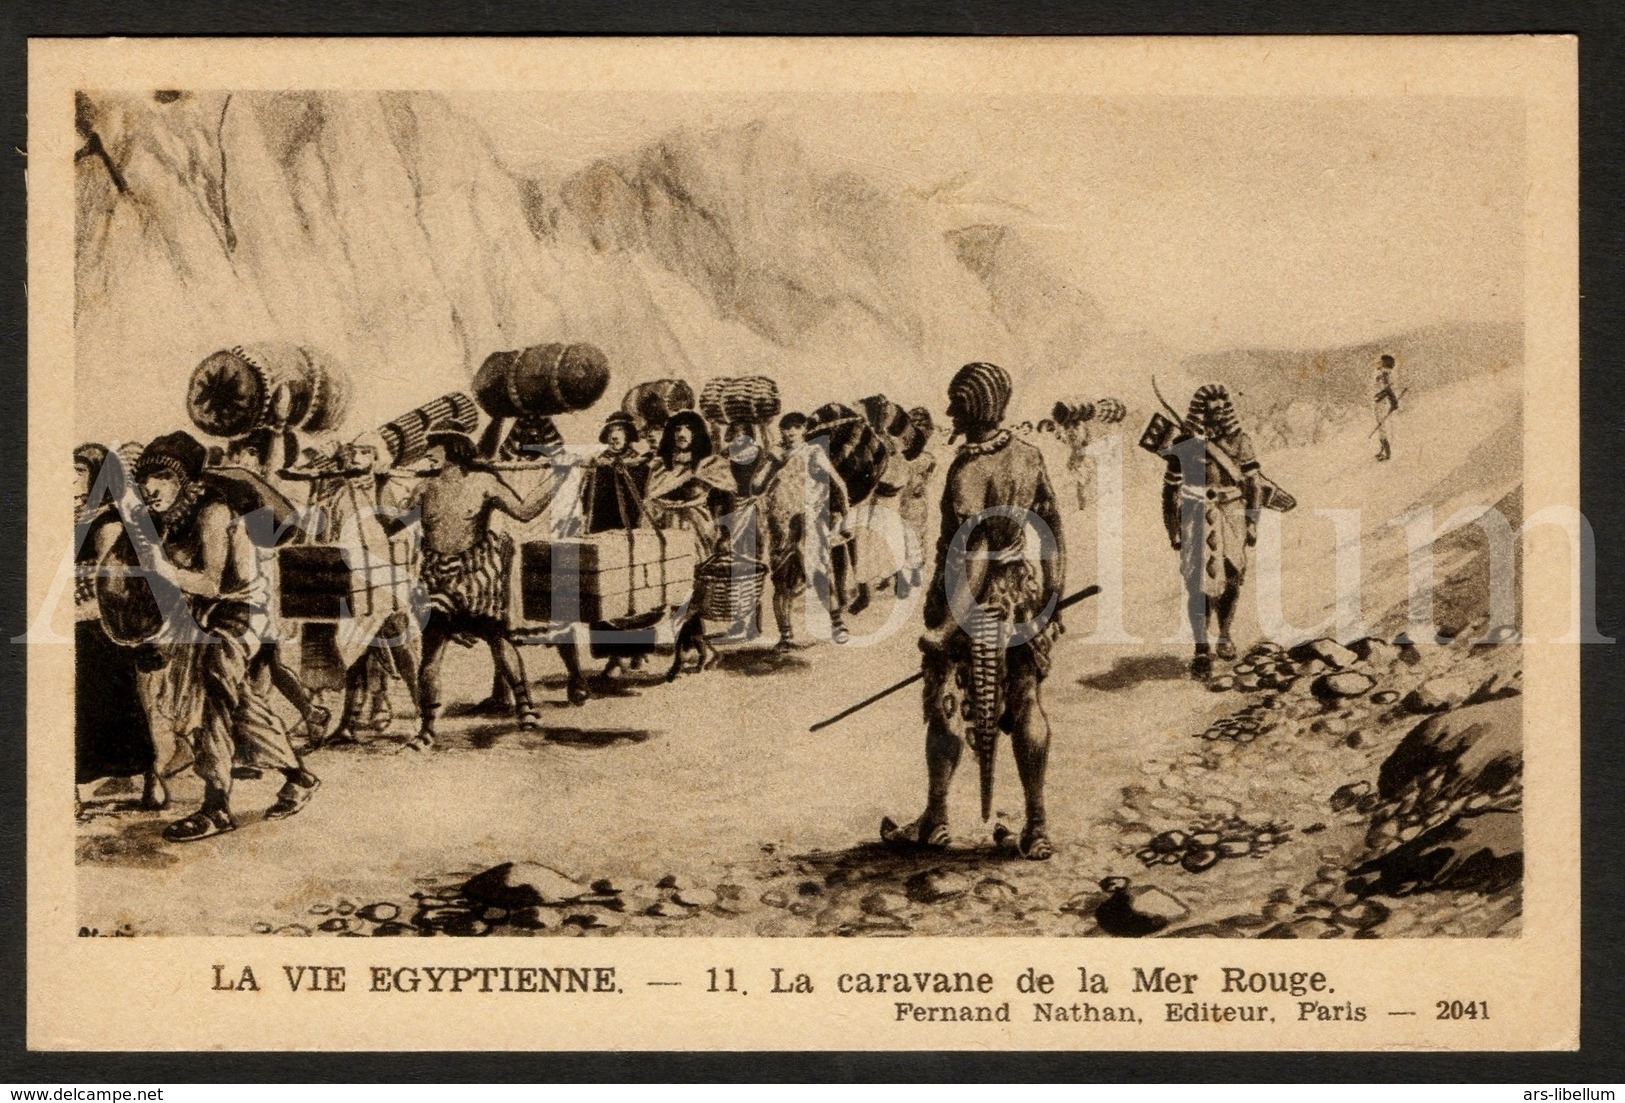 Postcard / CPA / Fernand Nathan / Unused / La Vie Egyptienne / La Caravane De La Mer Rouge / 11 / 2041 - Geschiedenis